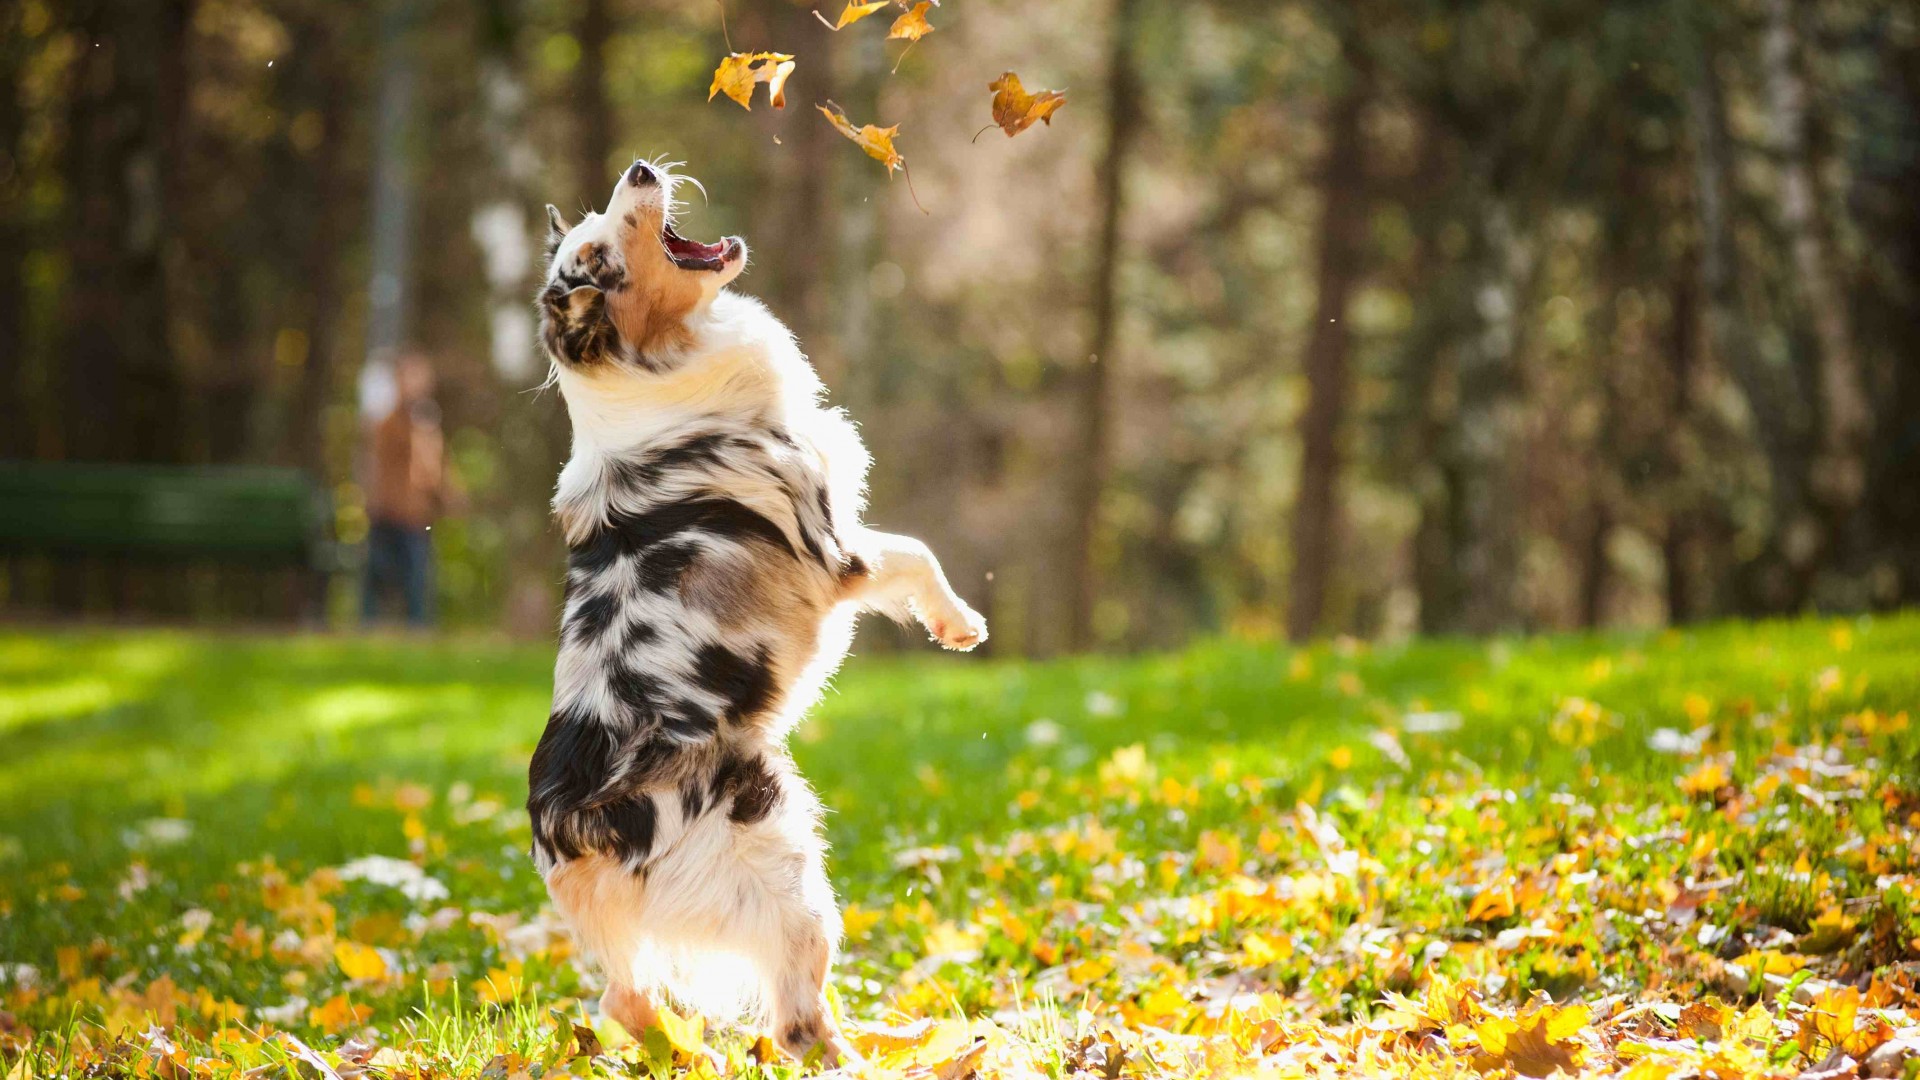 Dog, puppy, jumping, leaves, autumn, pet, green grass, park (horizontal)